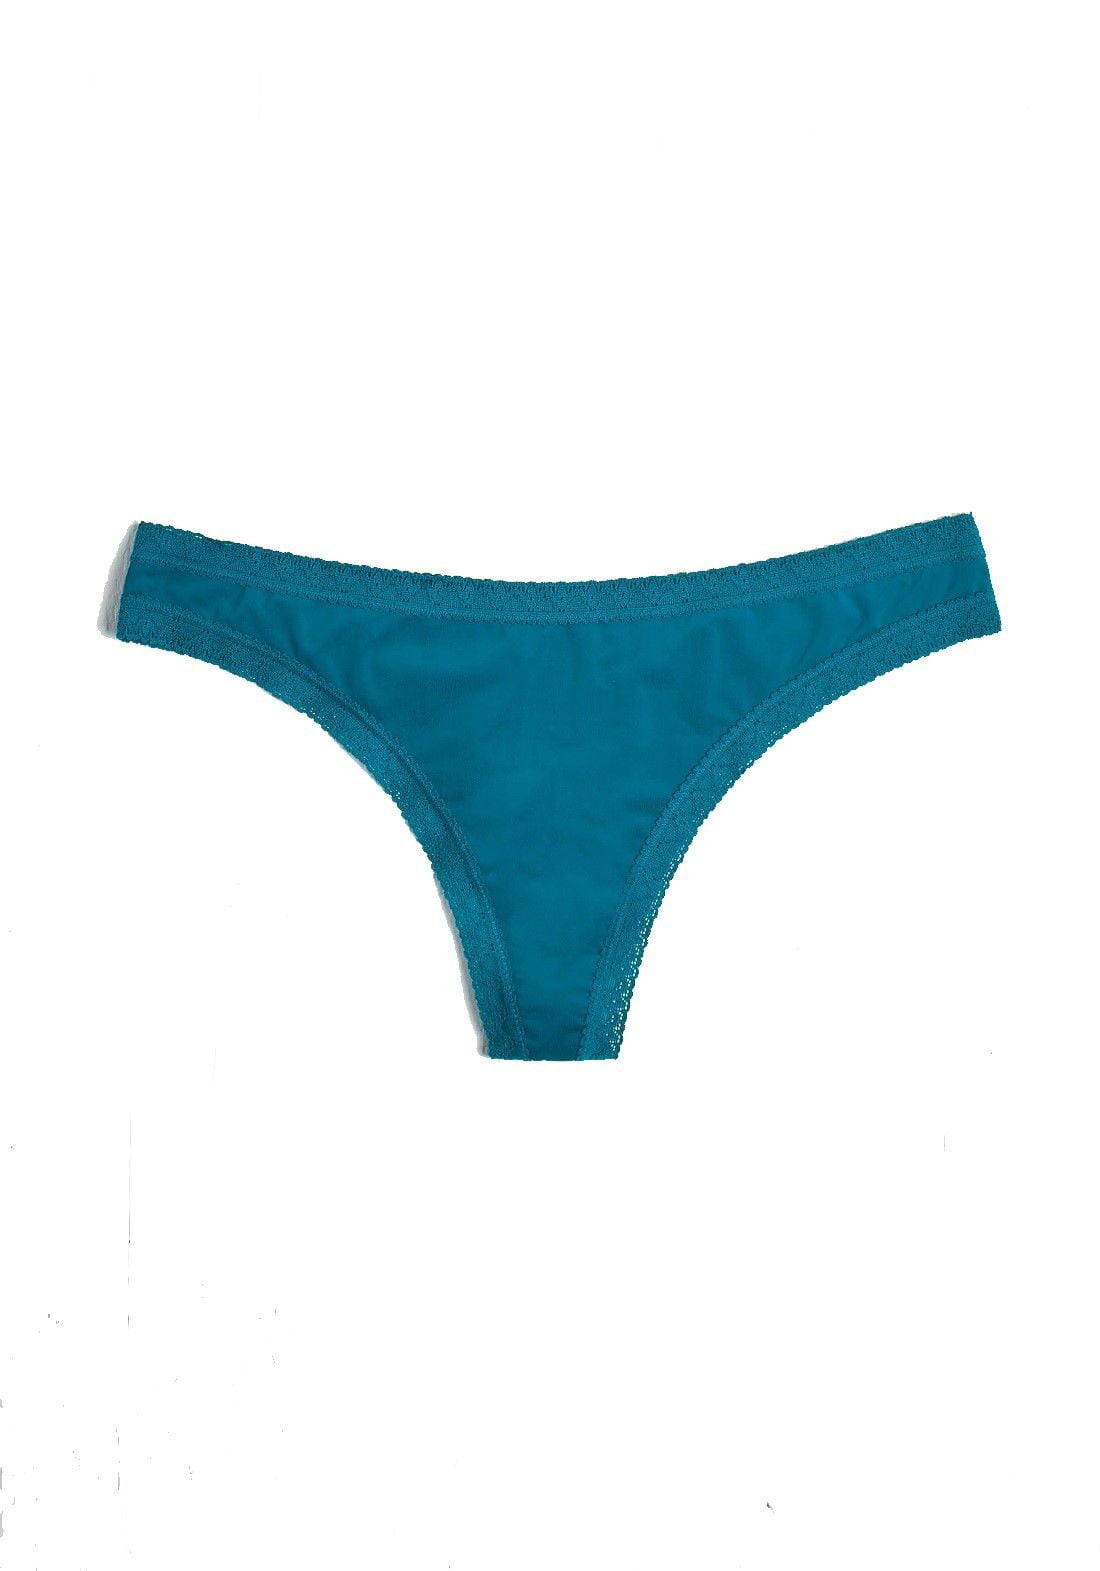 BLUSH Pretty Little Panty Thong Tanga - 0229622 - Walmart.com